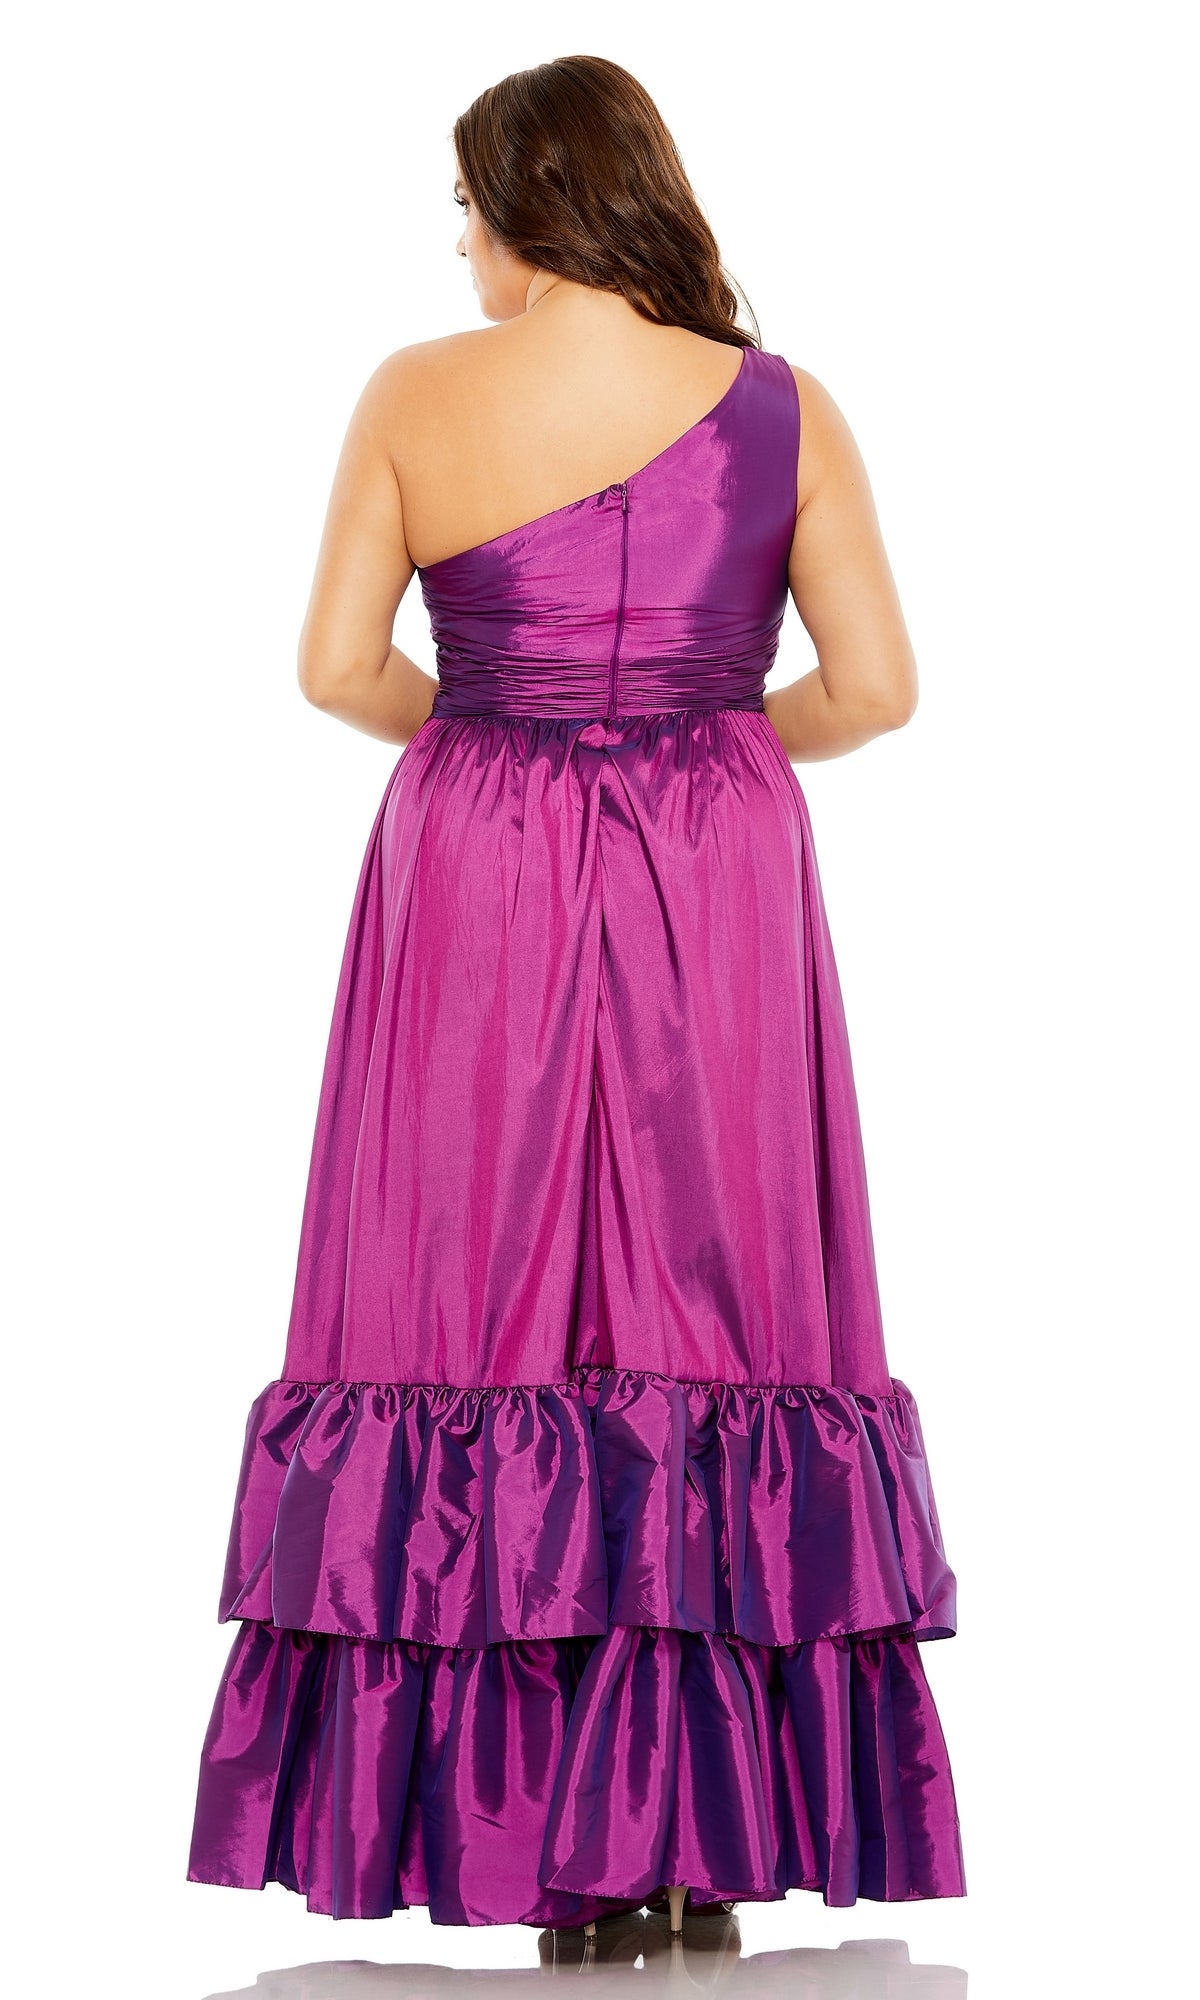 Long Plus-Size Formal Dress 68527 by Mac Duggal